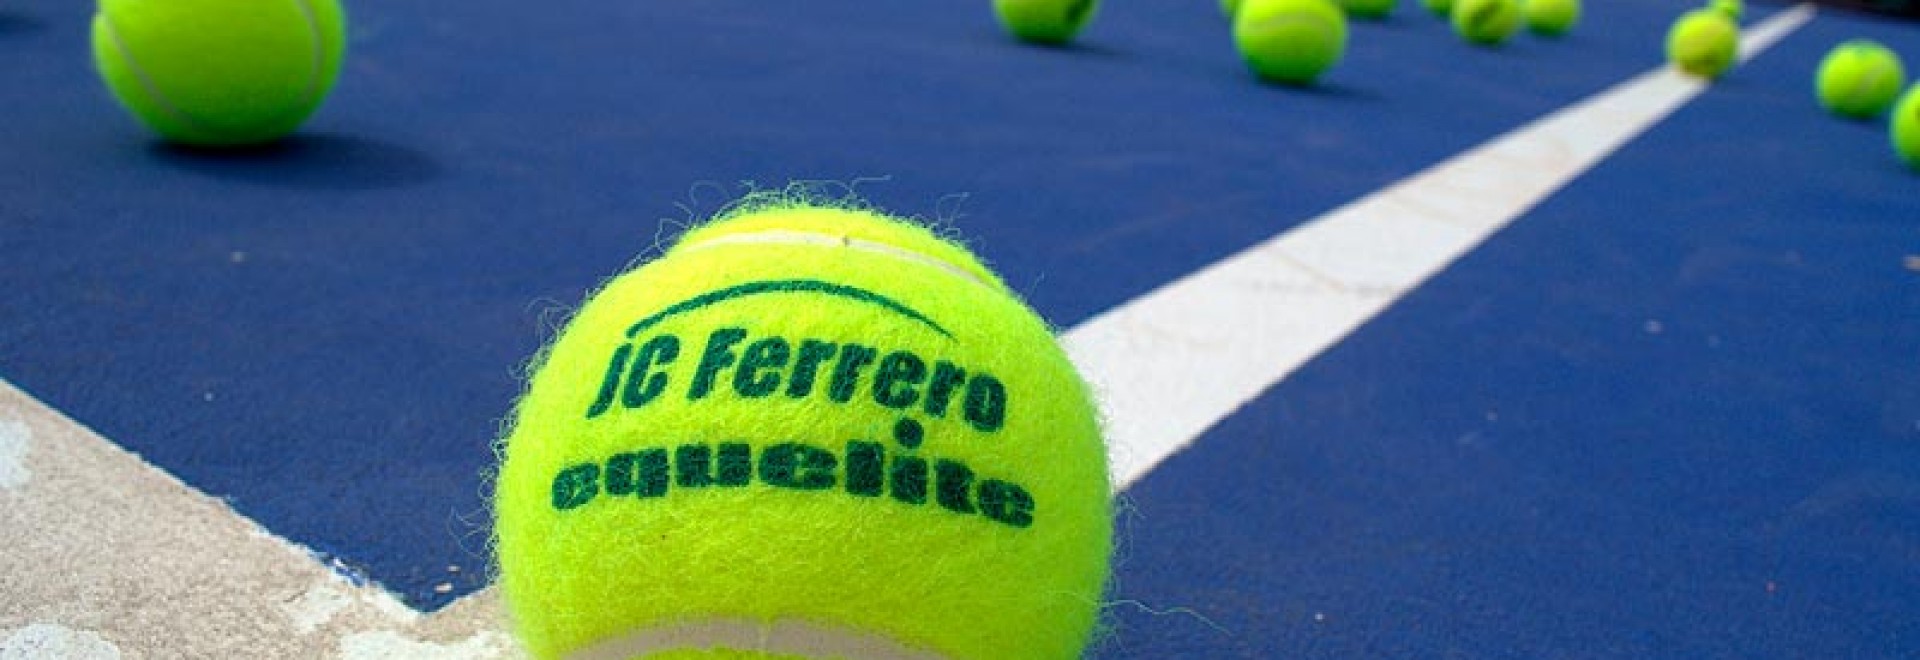 High Performance Training Program - Juan Carlos Ferrero Equelite Tennis Academy, Alicante